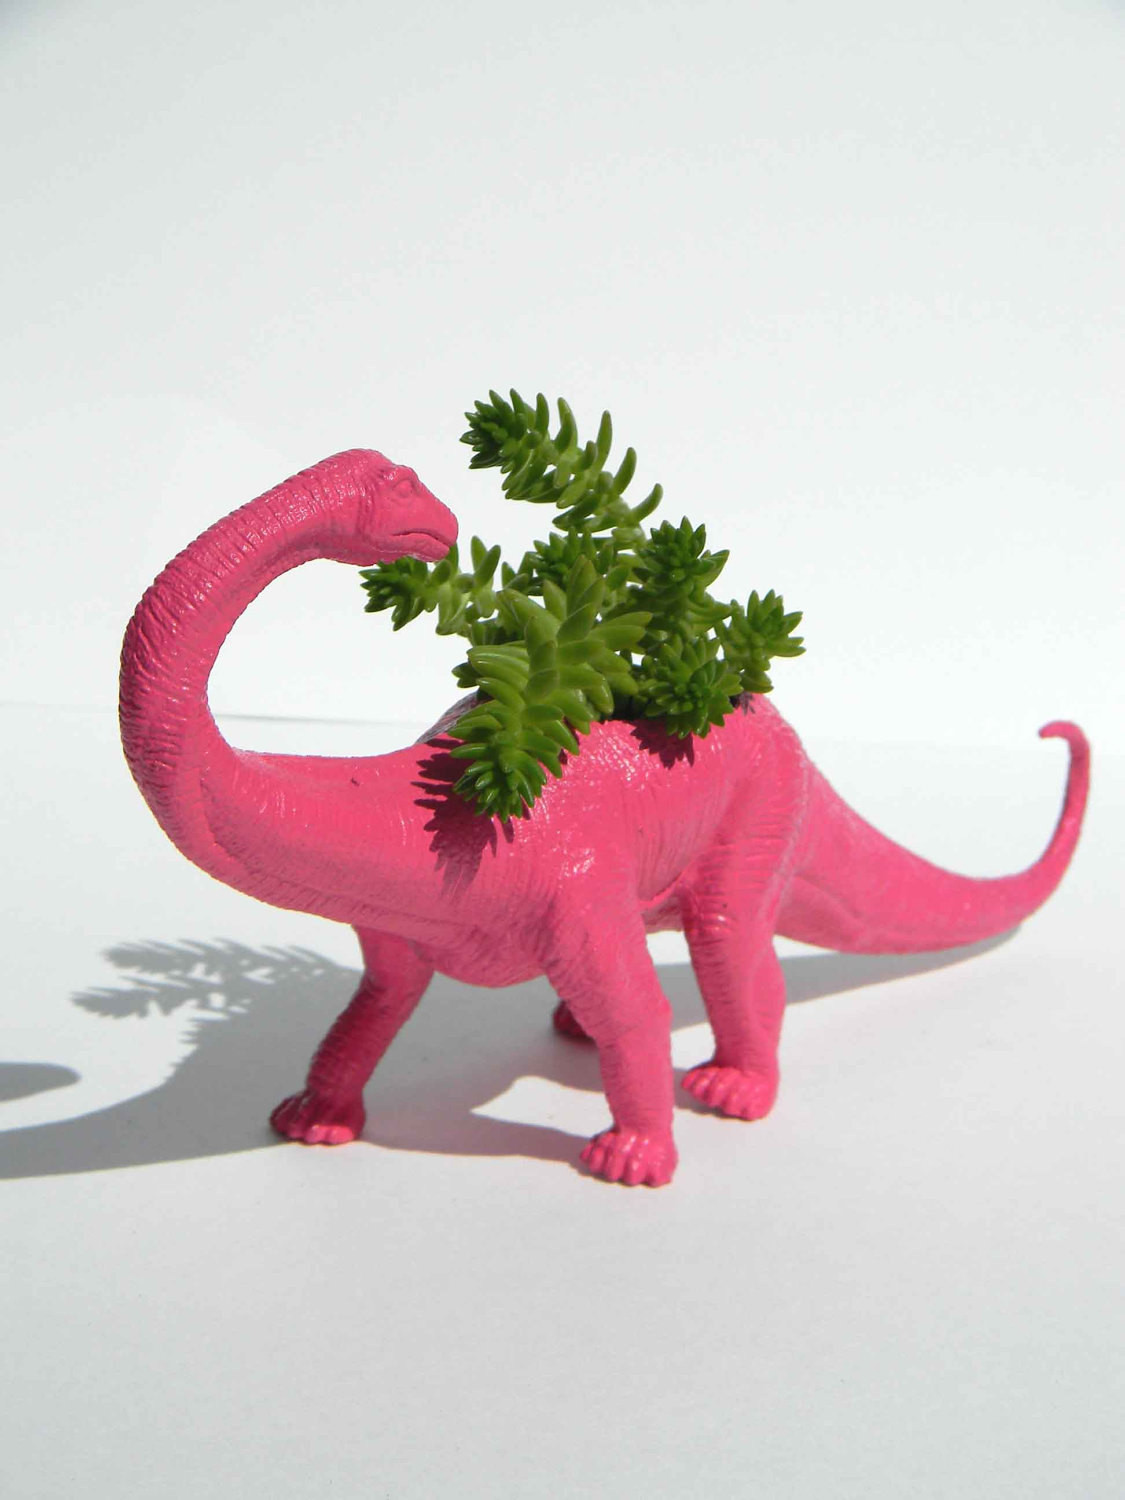 Best ideas about Dinosaur Succulent Planter
. Save or Pin Dinosaur Planter Bubble Gum Pink Add Your Own Succulent Plant Now.